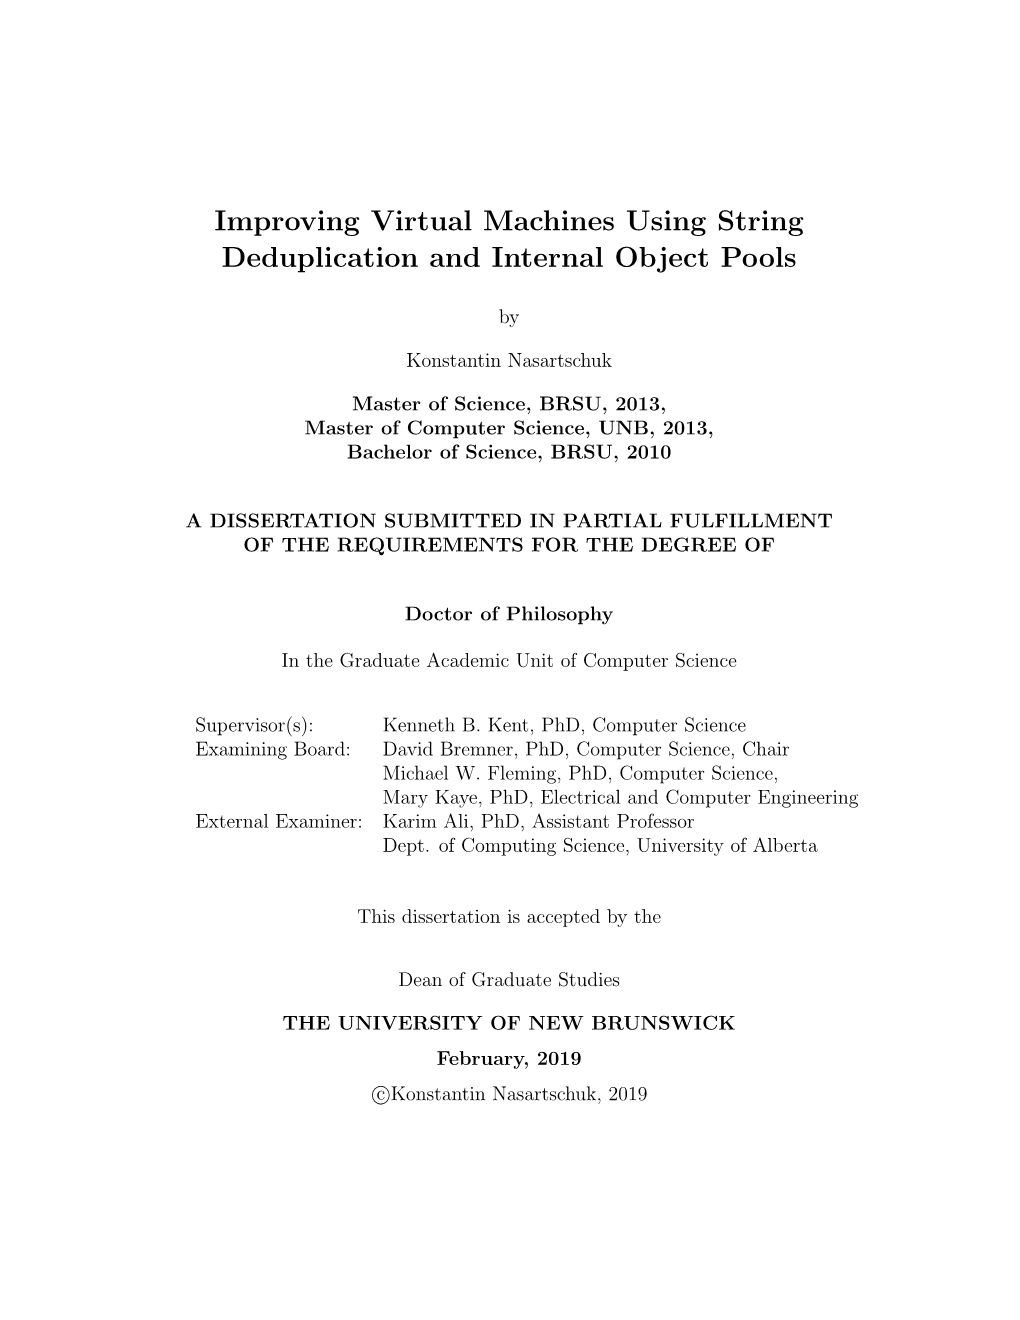 Improving Virtual Machines Using String Deduplication and Internal Object Pools